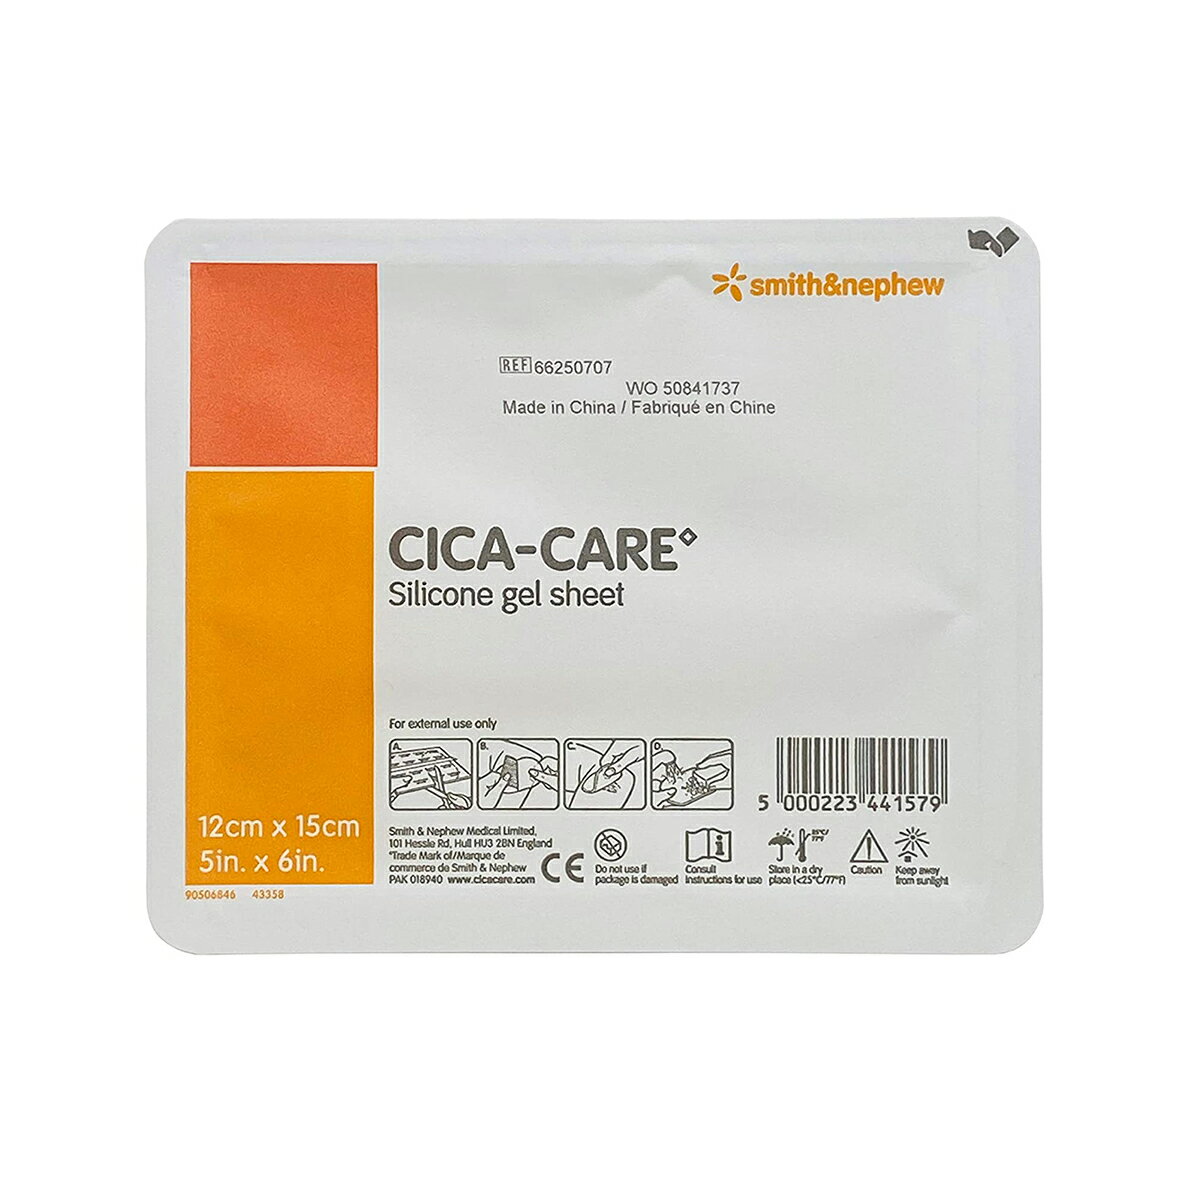 Cica-Care Silicone Gel Adhesive Sheet 5" x 6" シカケア シリコンジェル 12cm × 15cm傷跡を目立たなく シカケア